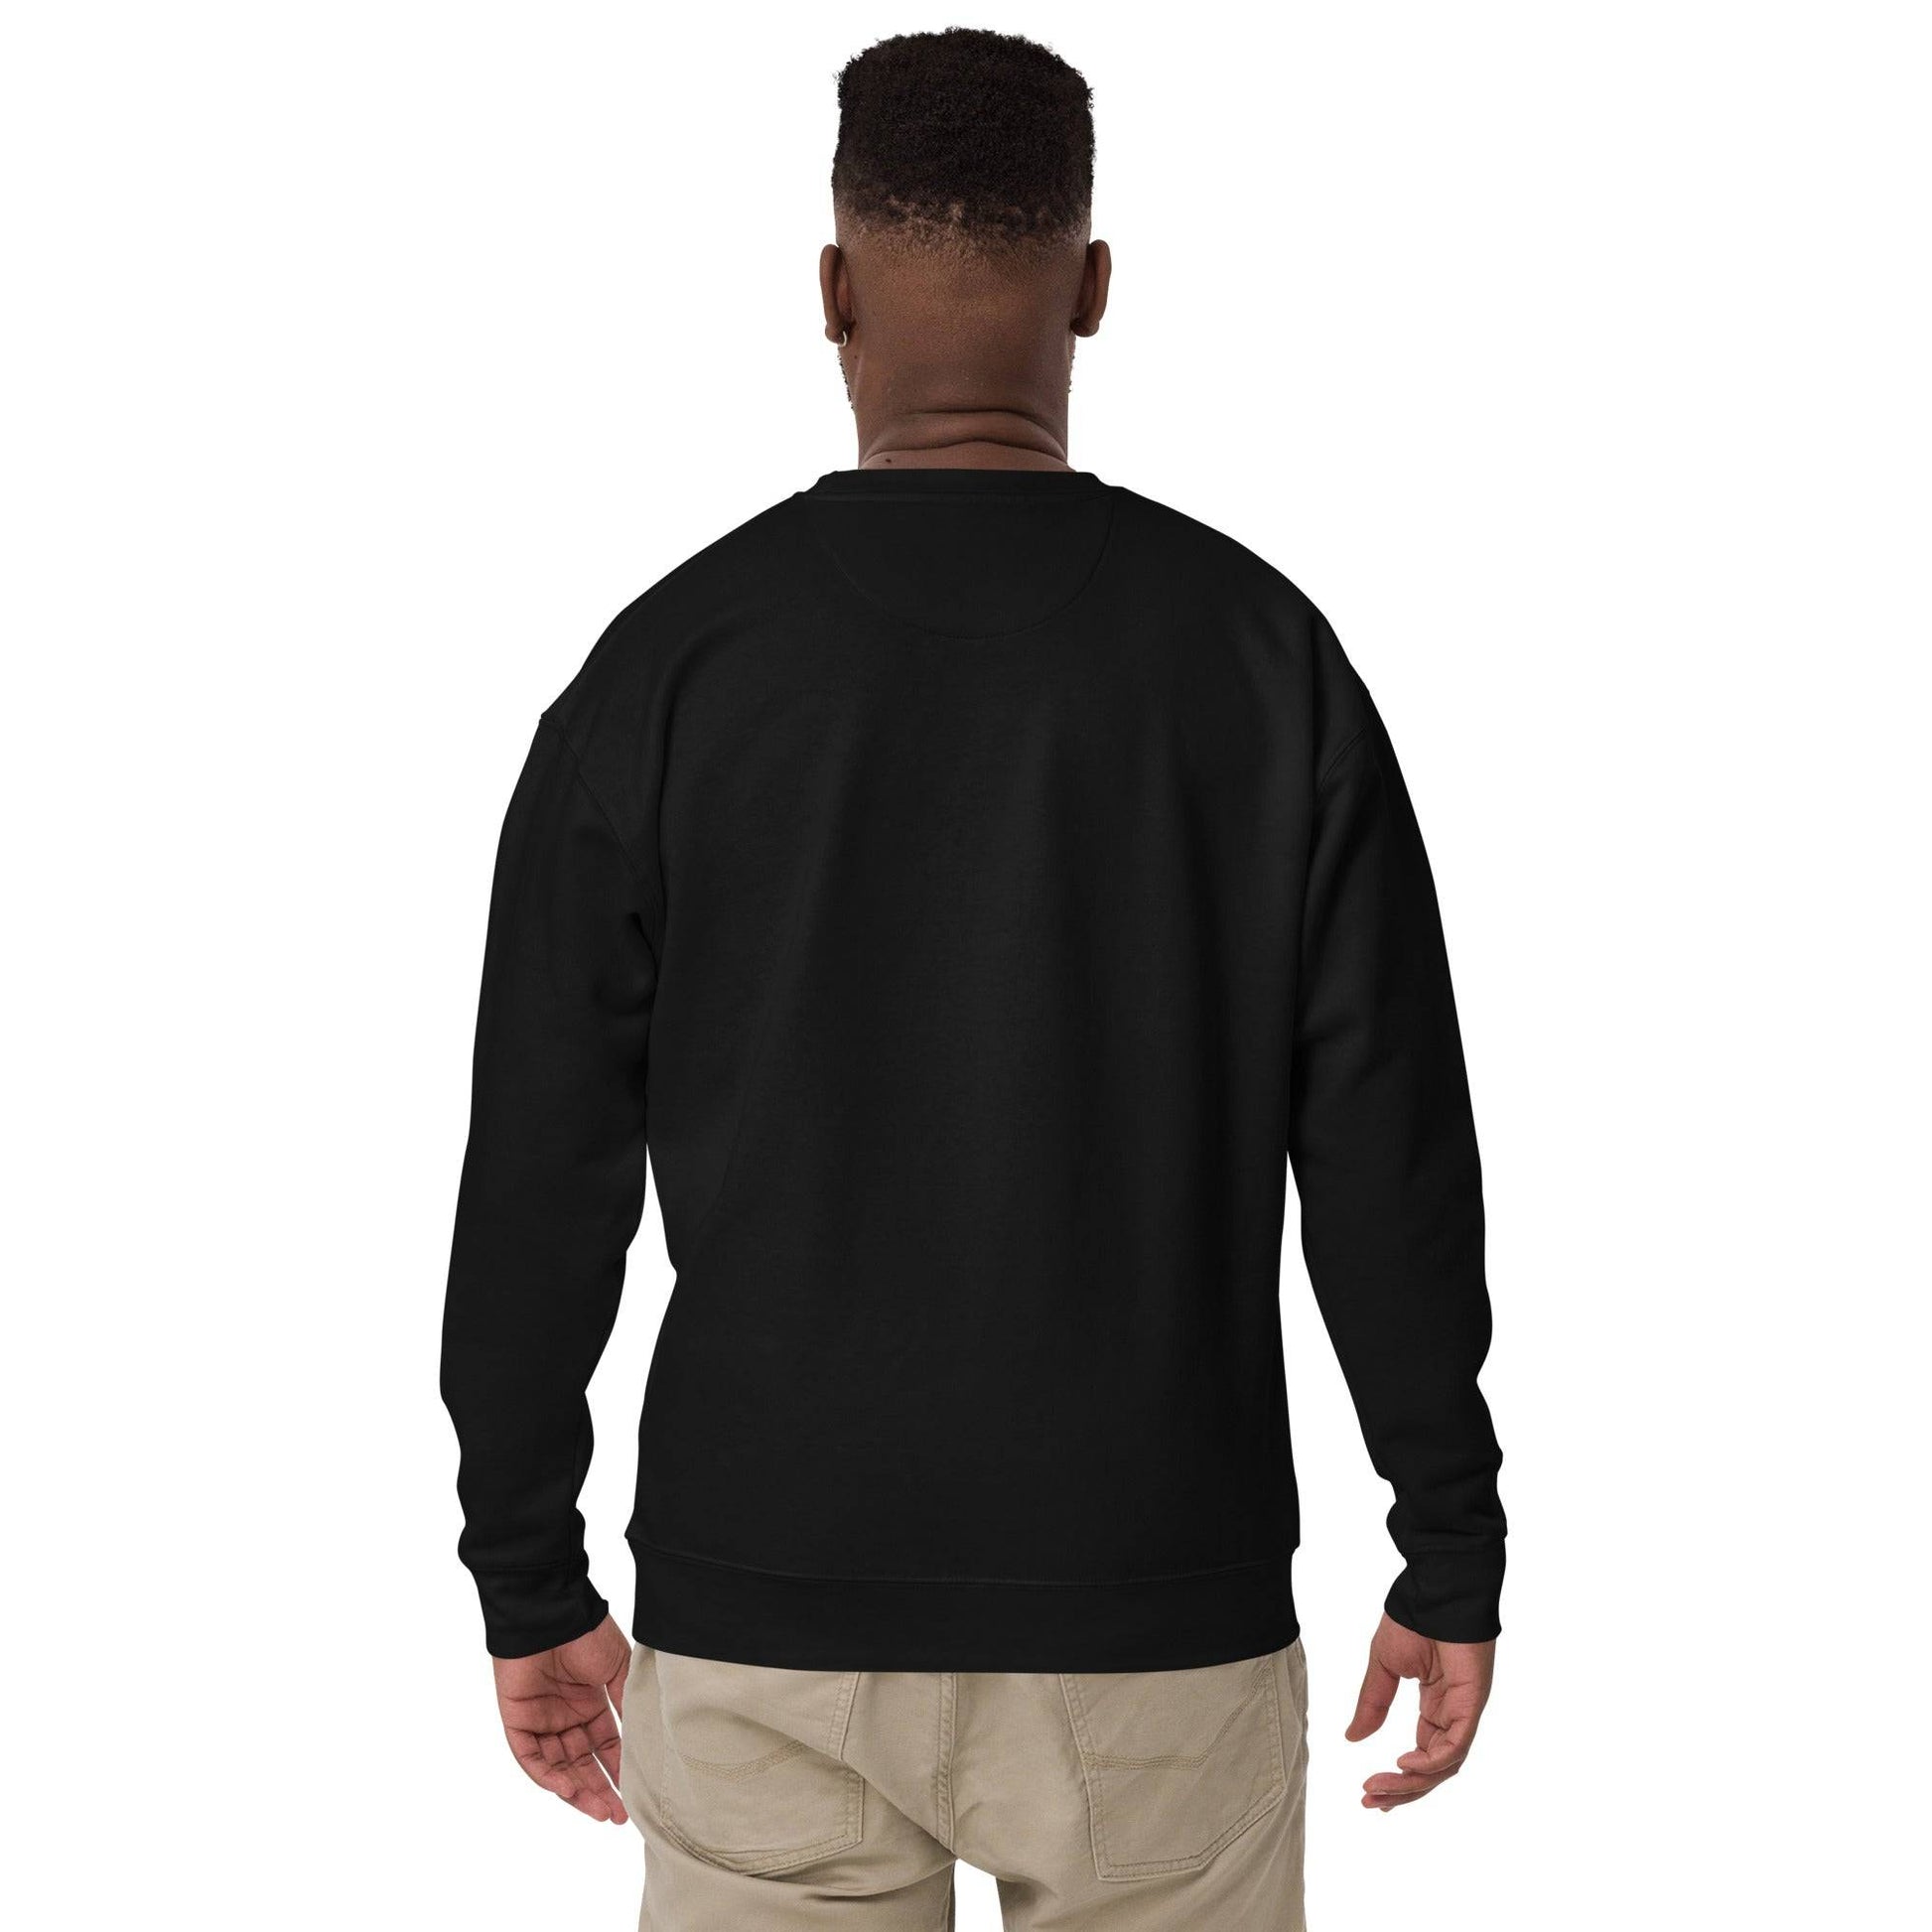 a man wearing a black sweatshirt and khaki pants